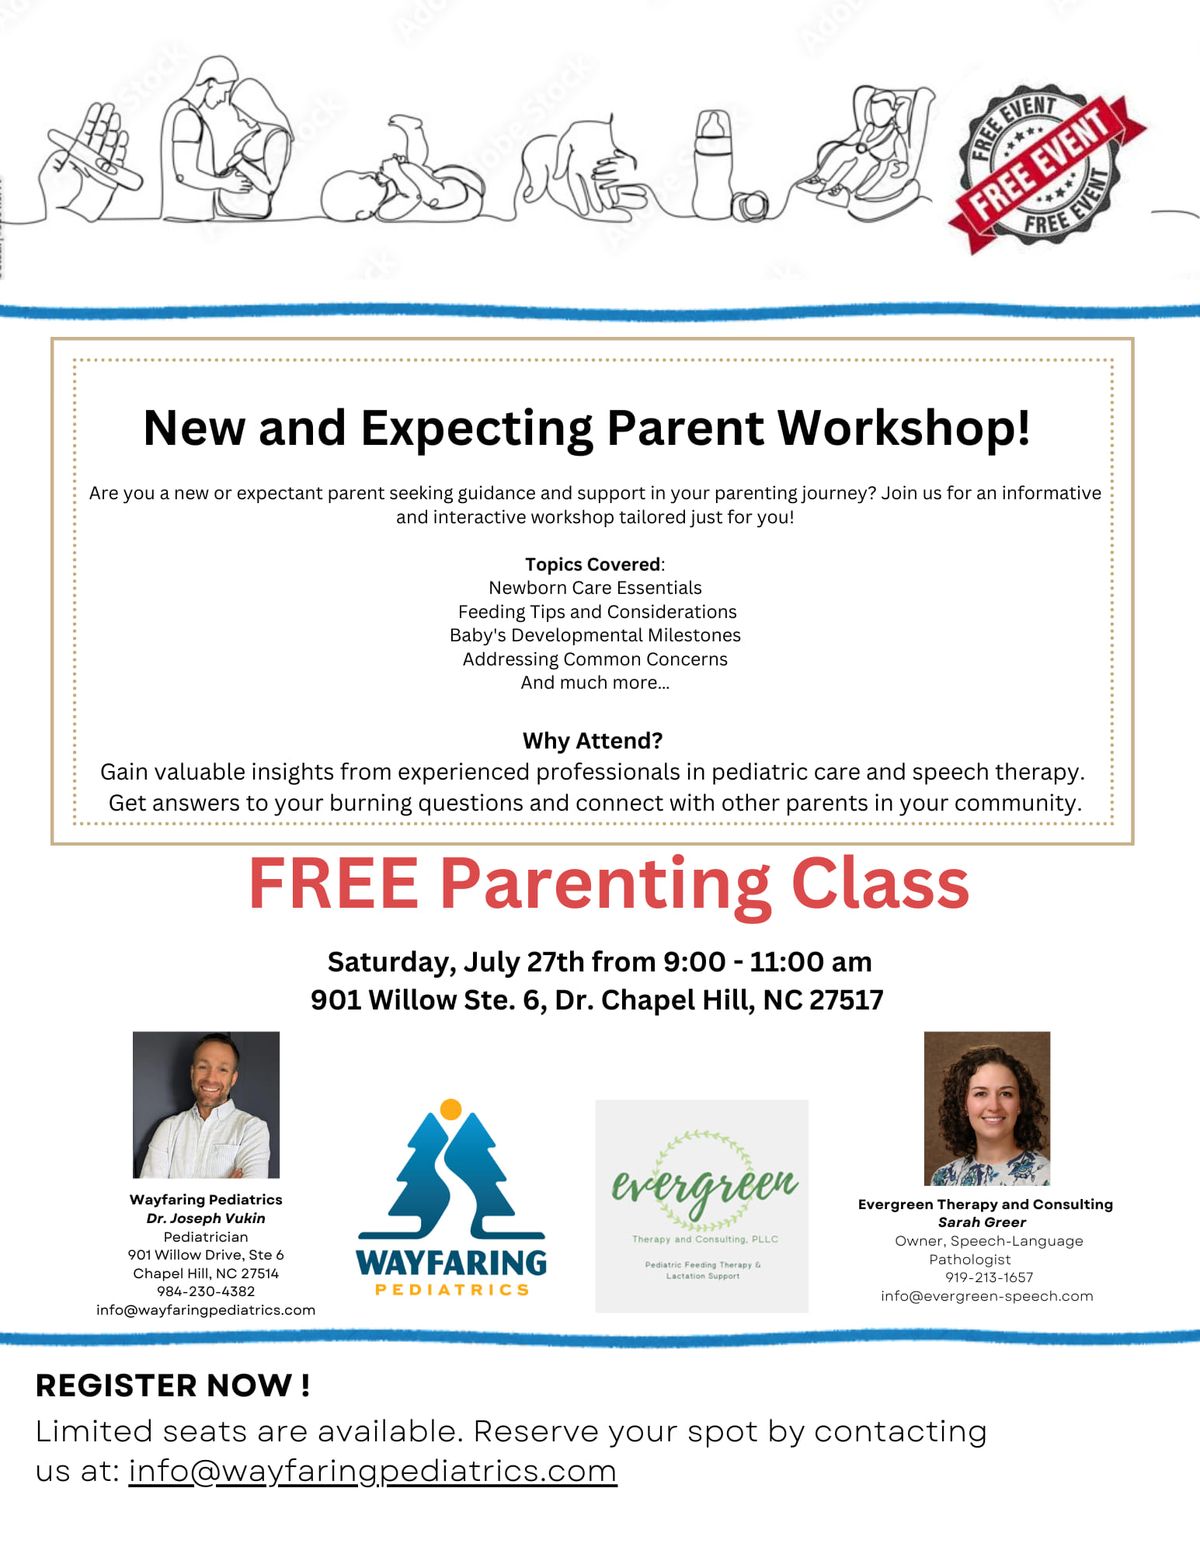 Wayfaring Pediatrics - Free New and Expectant Parent Workshop!